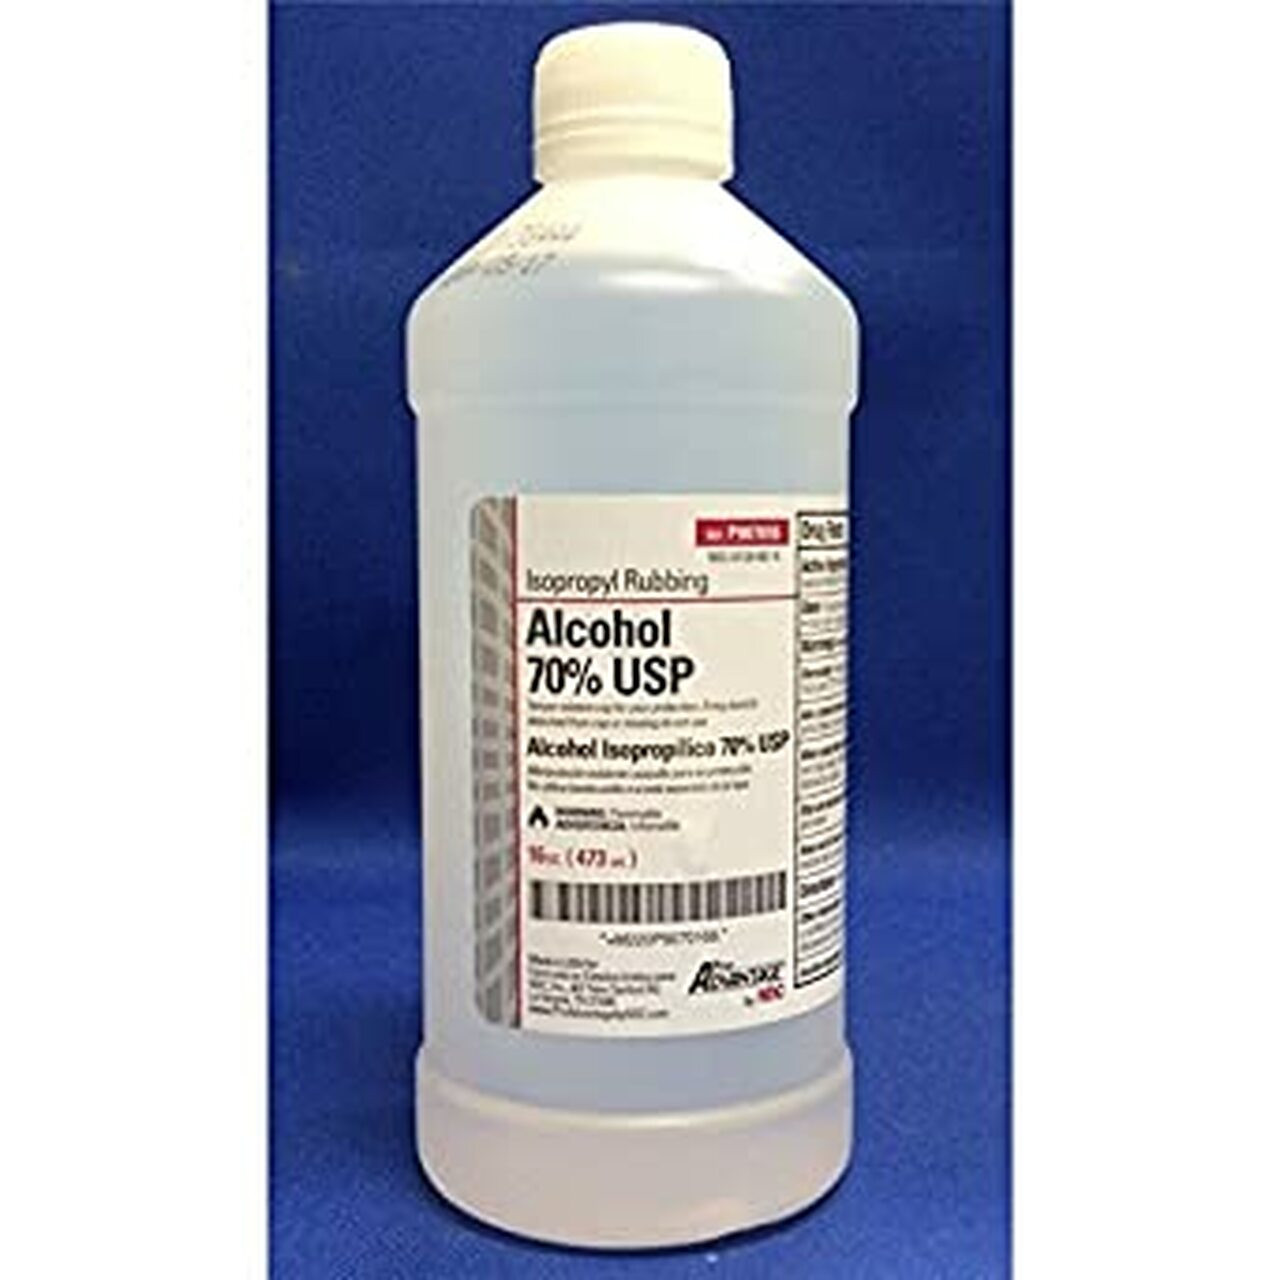 Dealmed Alcohol isopropílico 70% USP, antiséptico de primeros auxilios, 16  onzas líquidas, (paquete de 1)